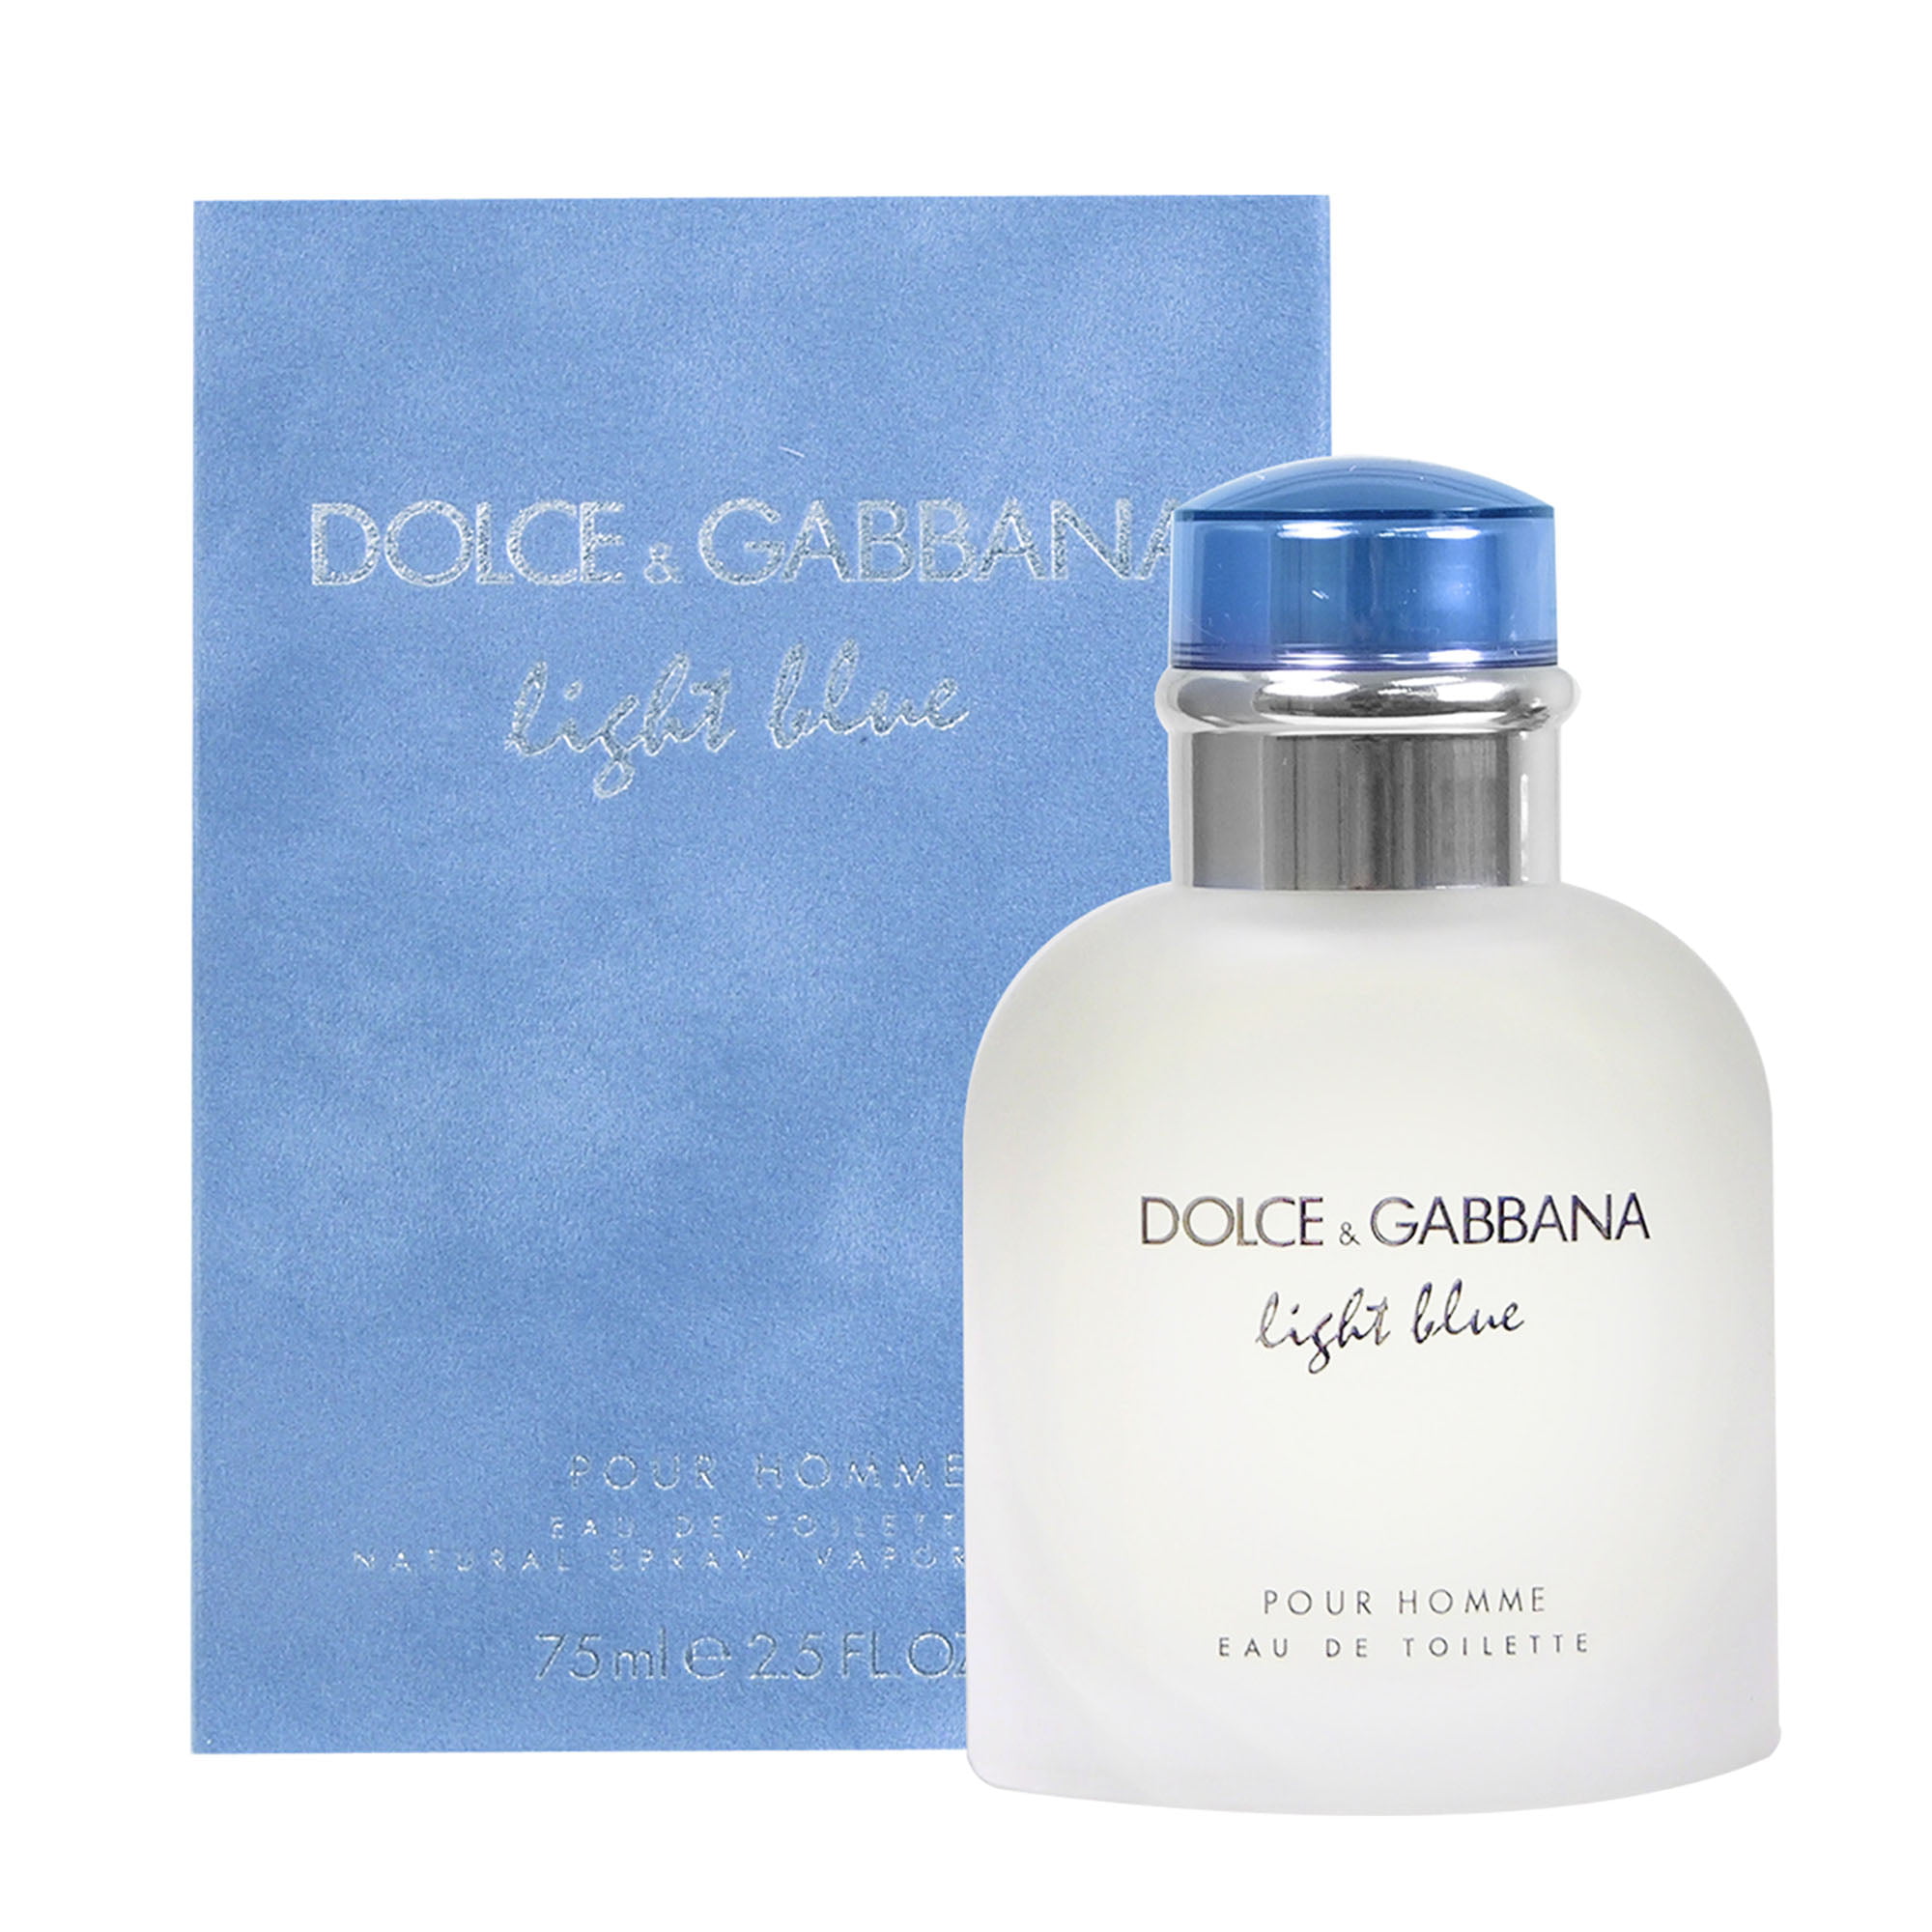 ORIGINAL Dolce Gabbana Light Blue Cologne for Men, 6.7 Oz | eBay